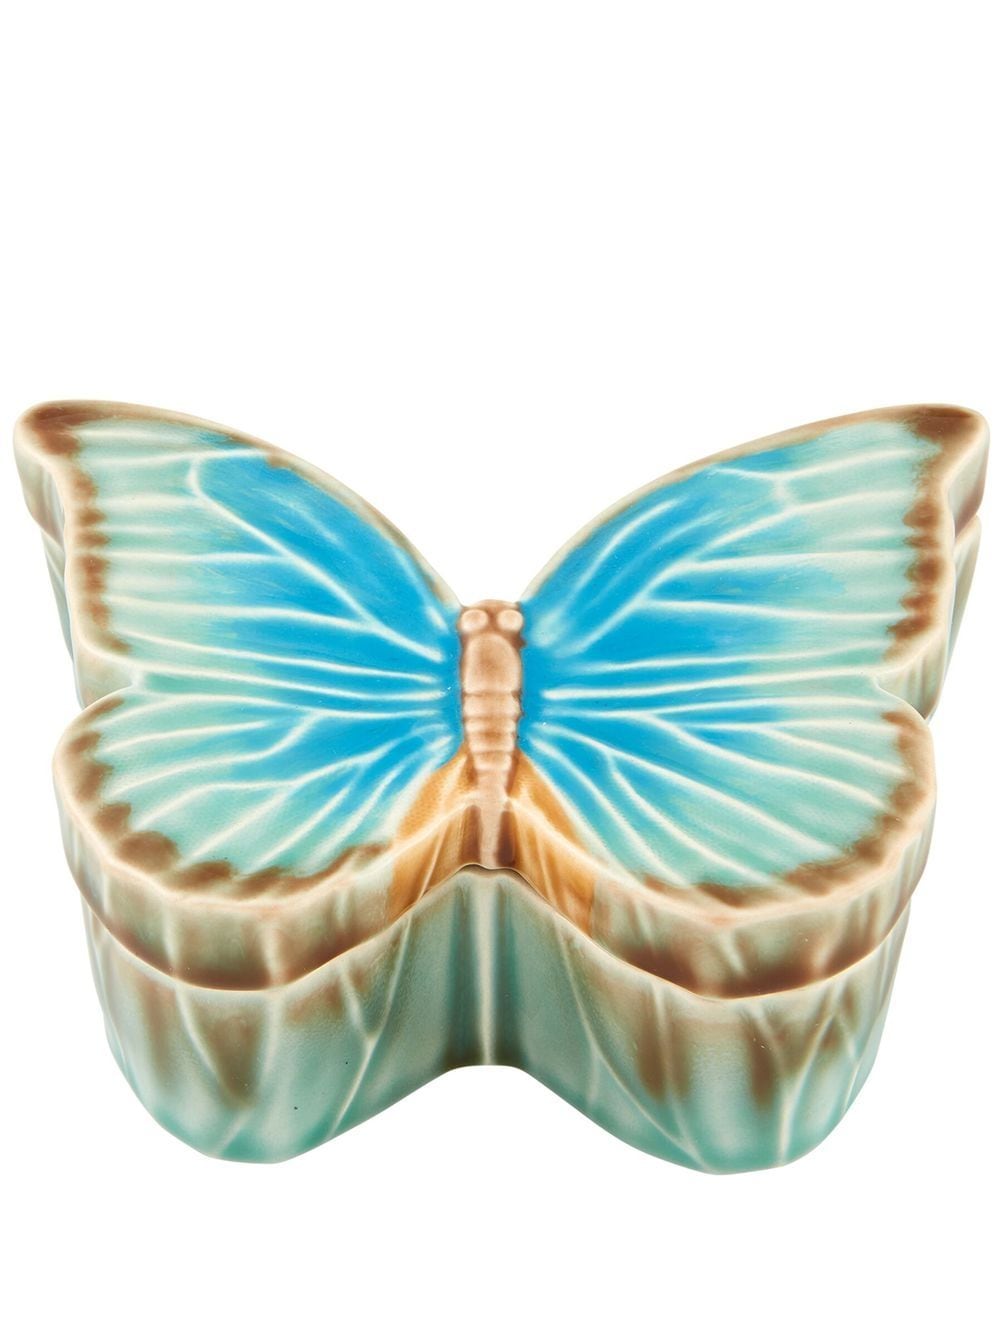 Bordallo Pinheiro 'Cloudy Butterflies' trinket box - Green